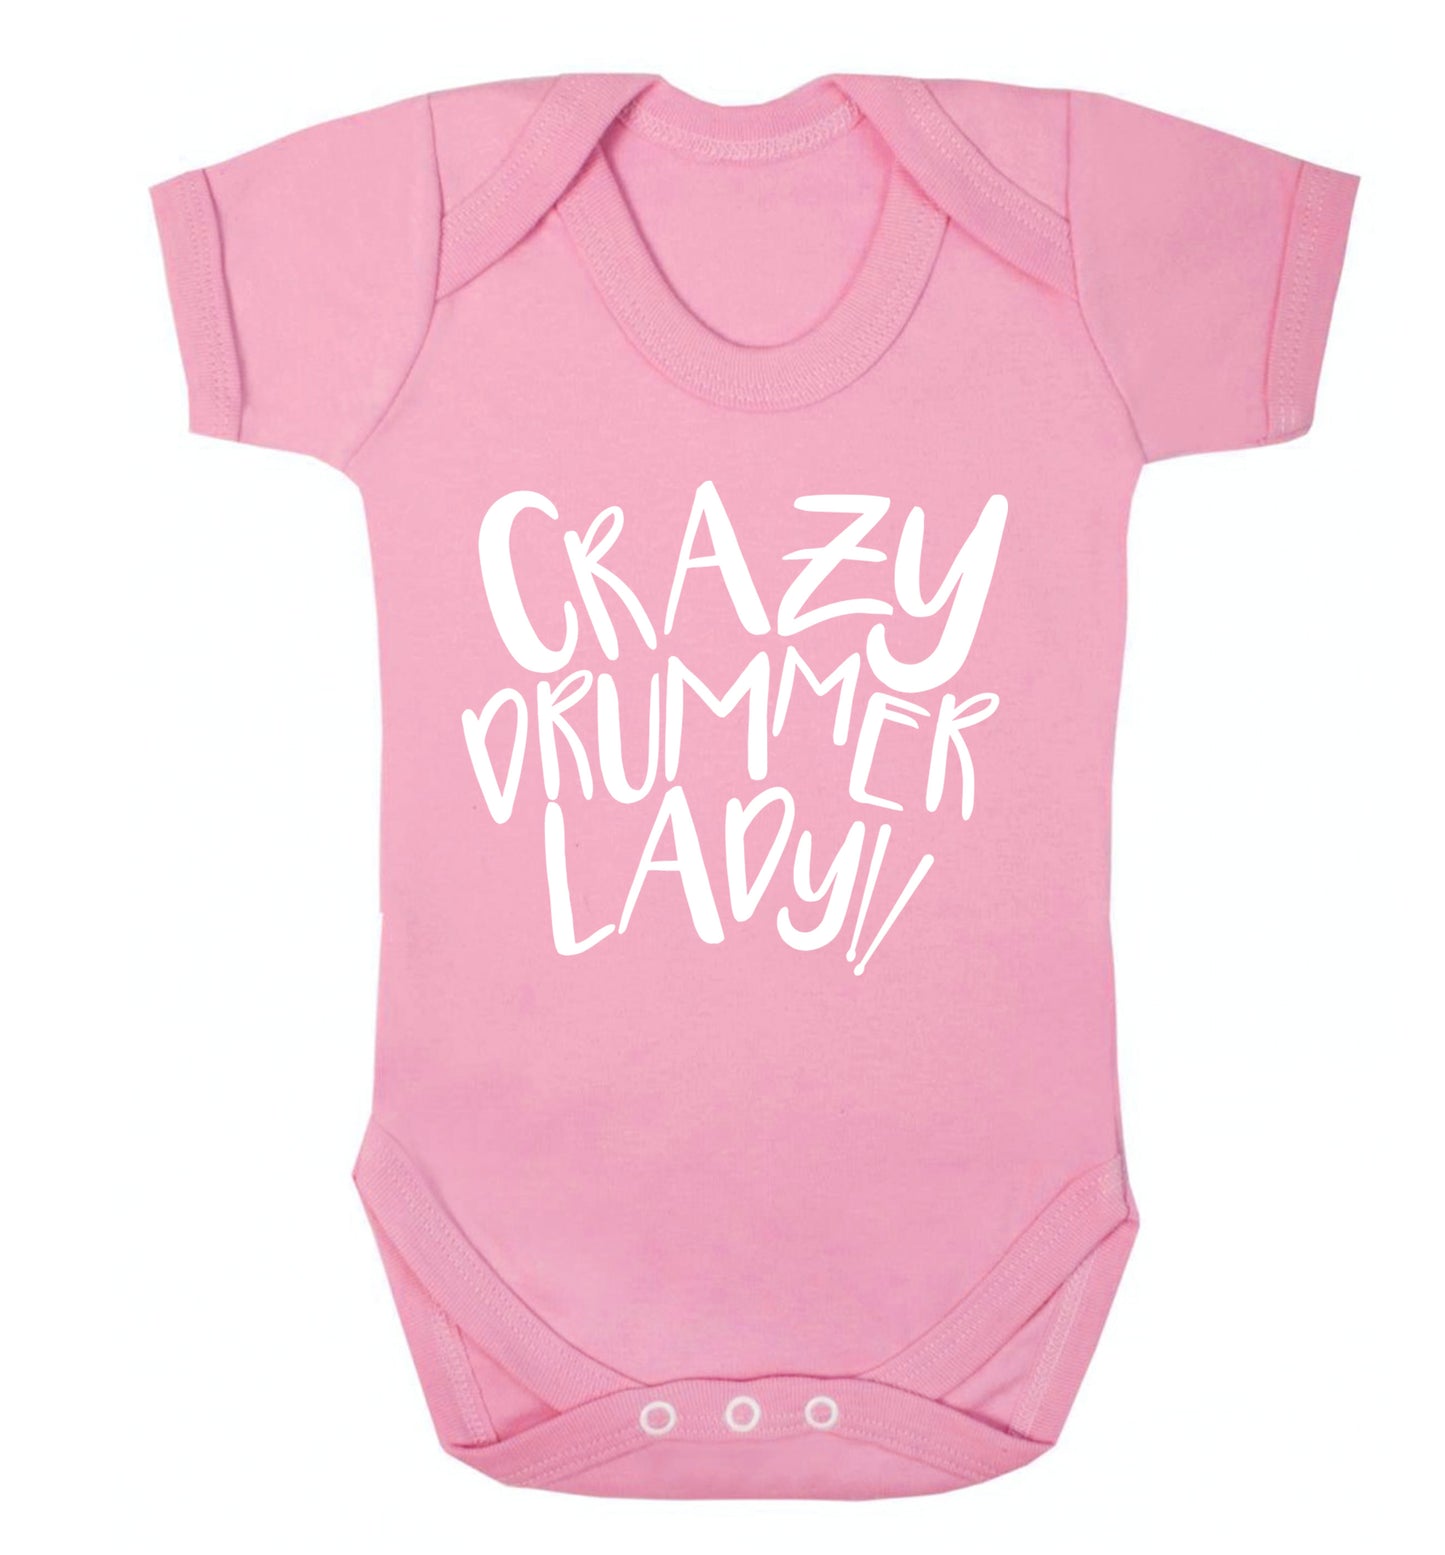 Crazy drummer lady Baby Vest pale pink 18-24 months